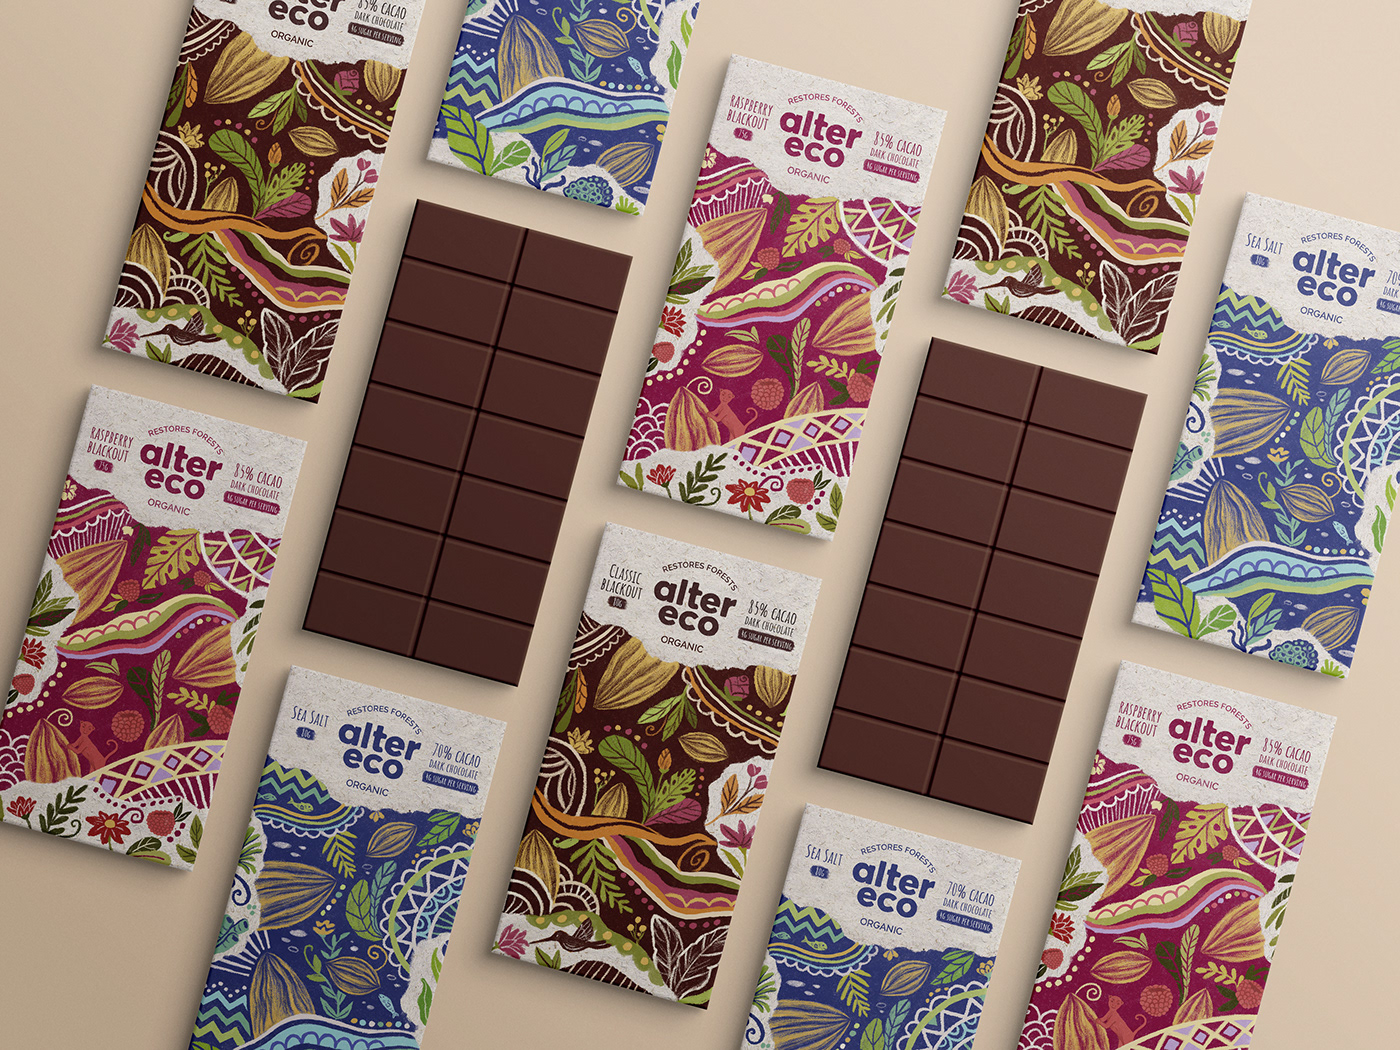 Packaging packaging design design chocolate chocolate packaging